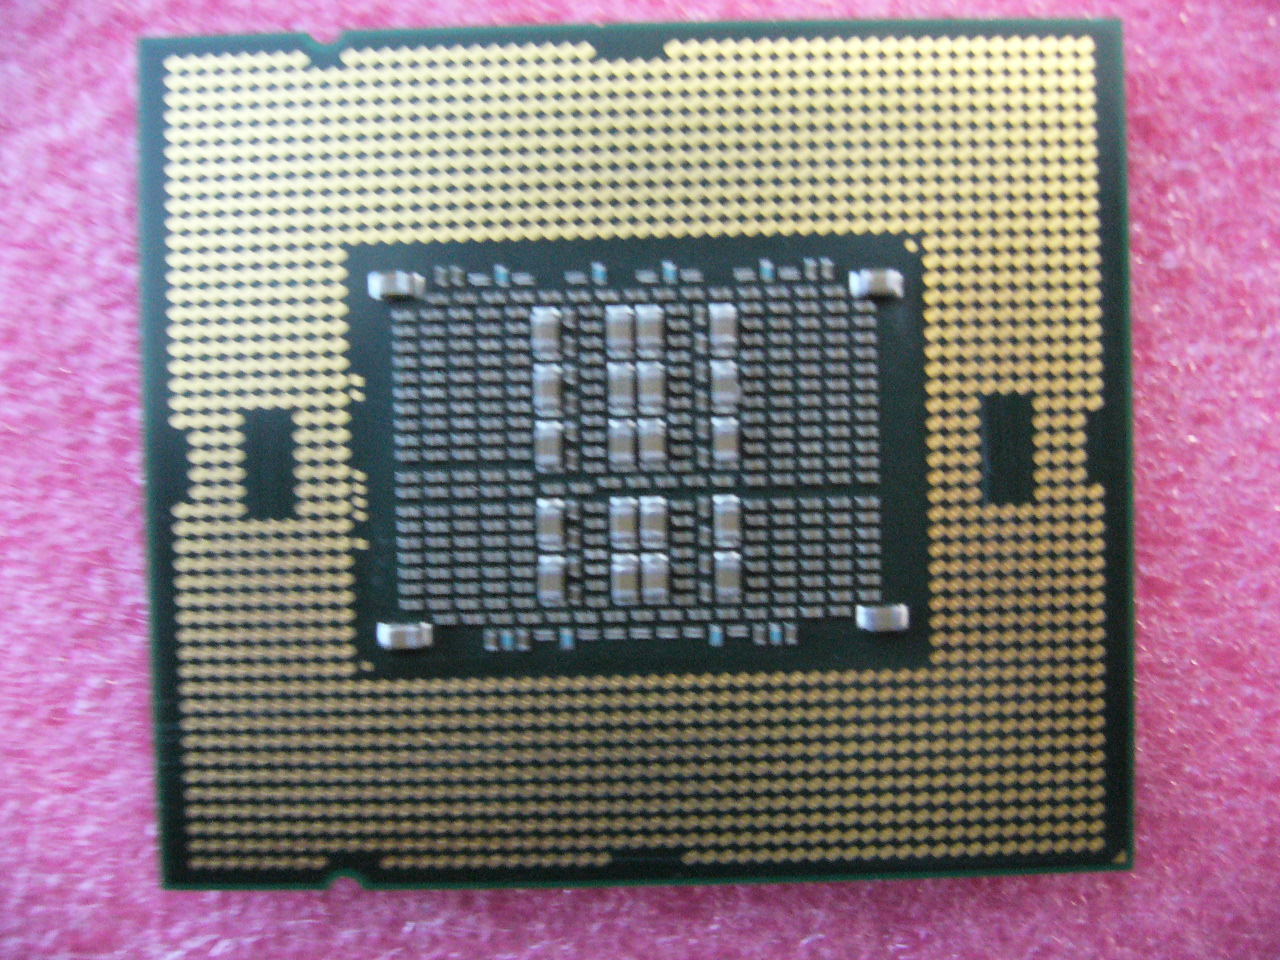 QTY 1x INTEL Ten-Core CPU E7-2860 2.26GHZ/24MB LGA1567 SLC3H - Click Image to Close